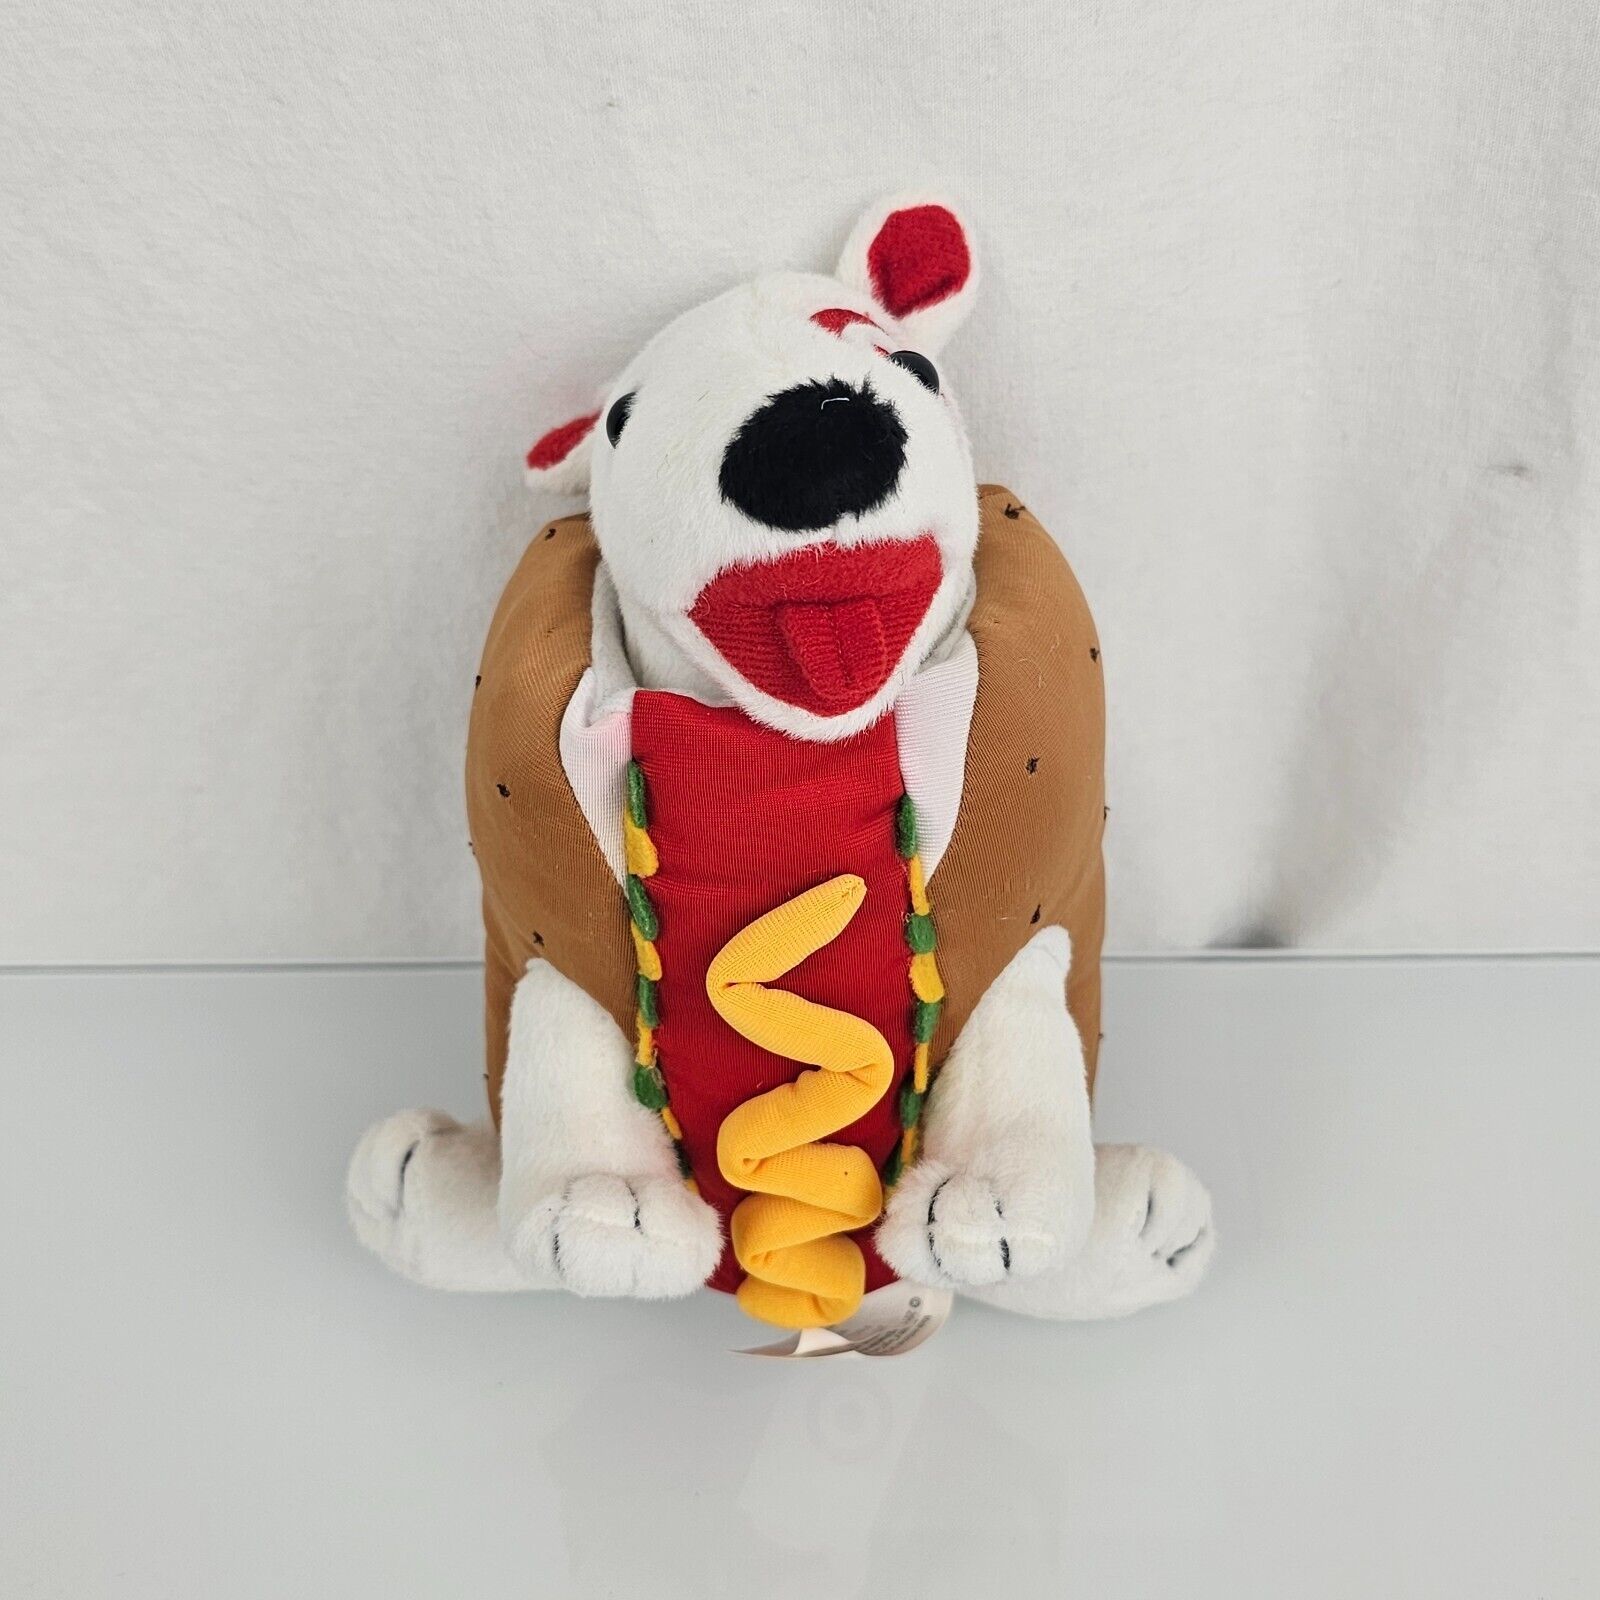 Target Bullseye Dog 2011 Hot Dog Edition 1 - 1262 of 5000 Plush Costume Hotdog - $39.59